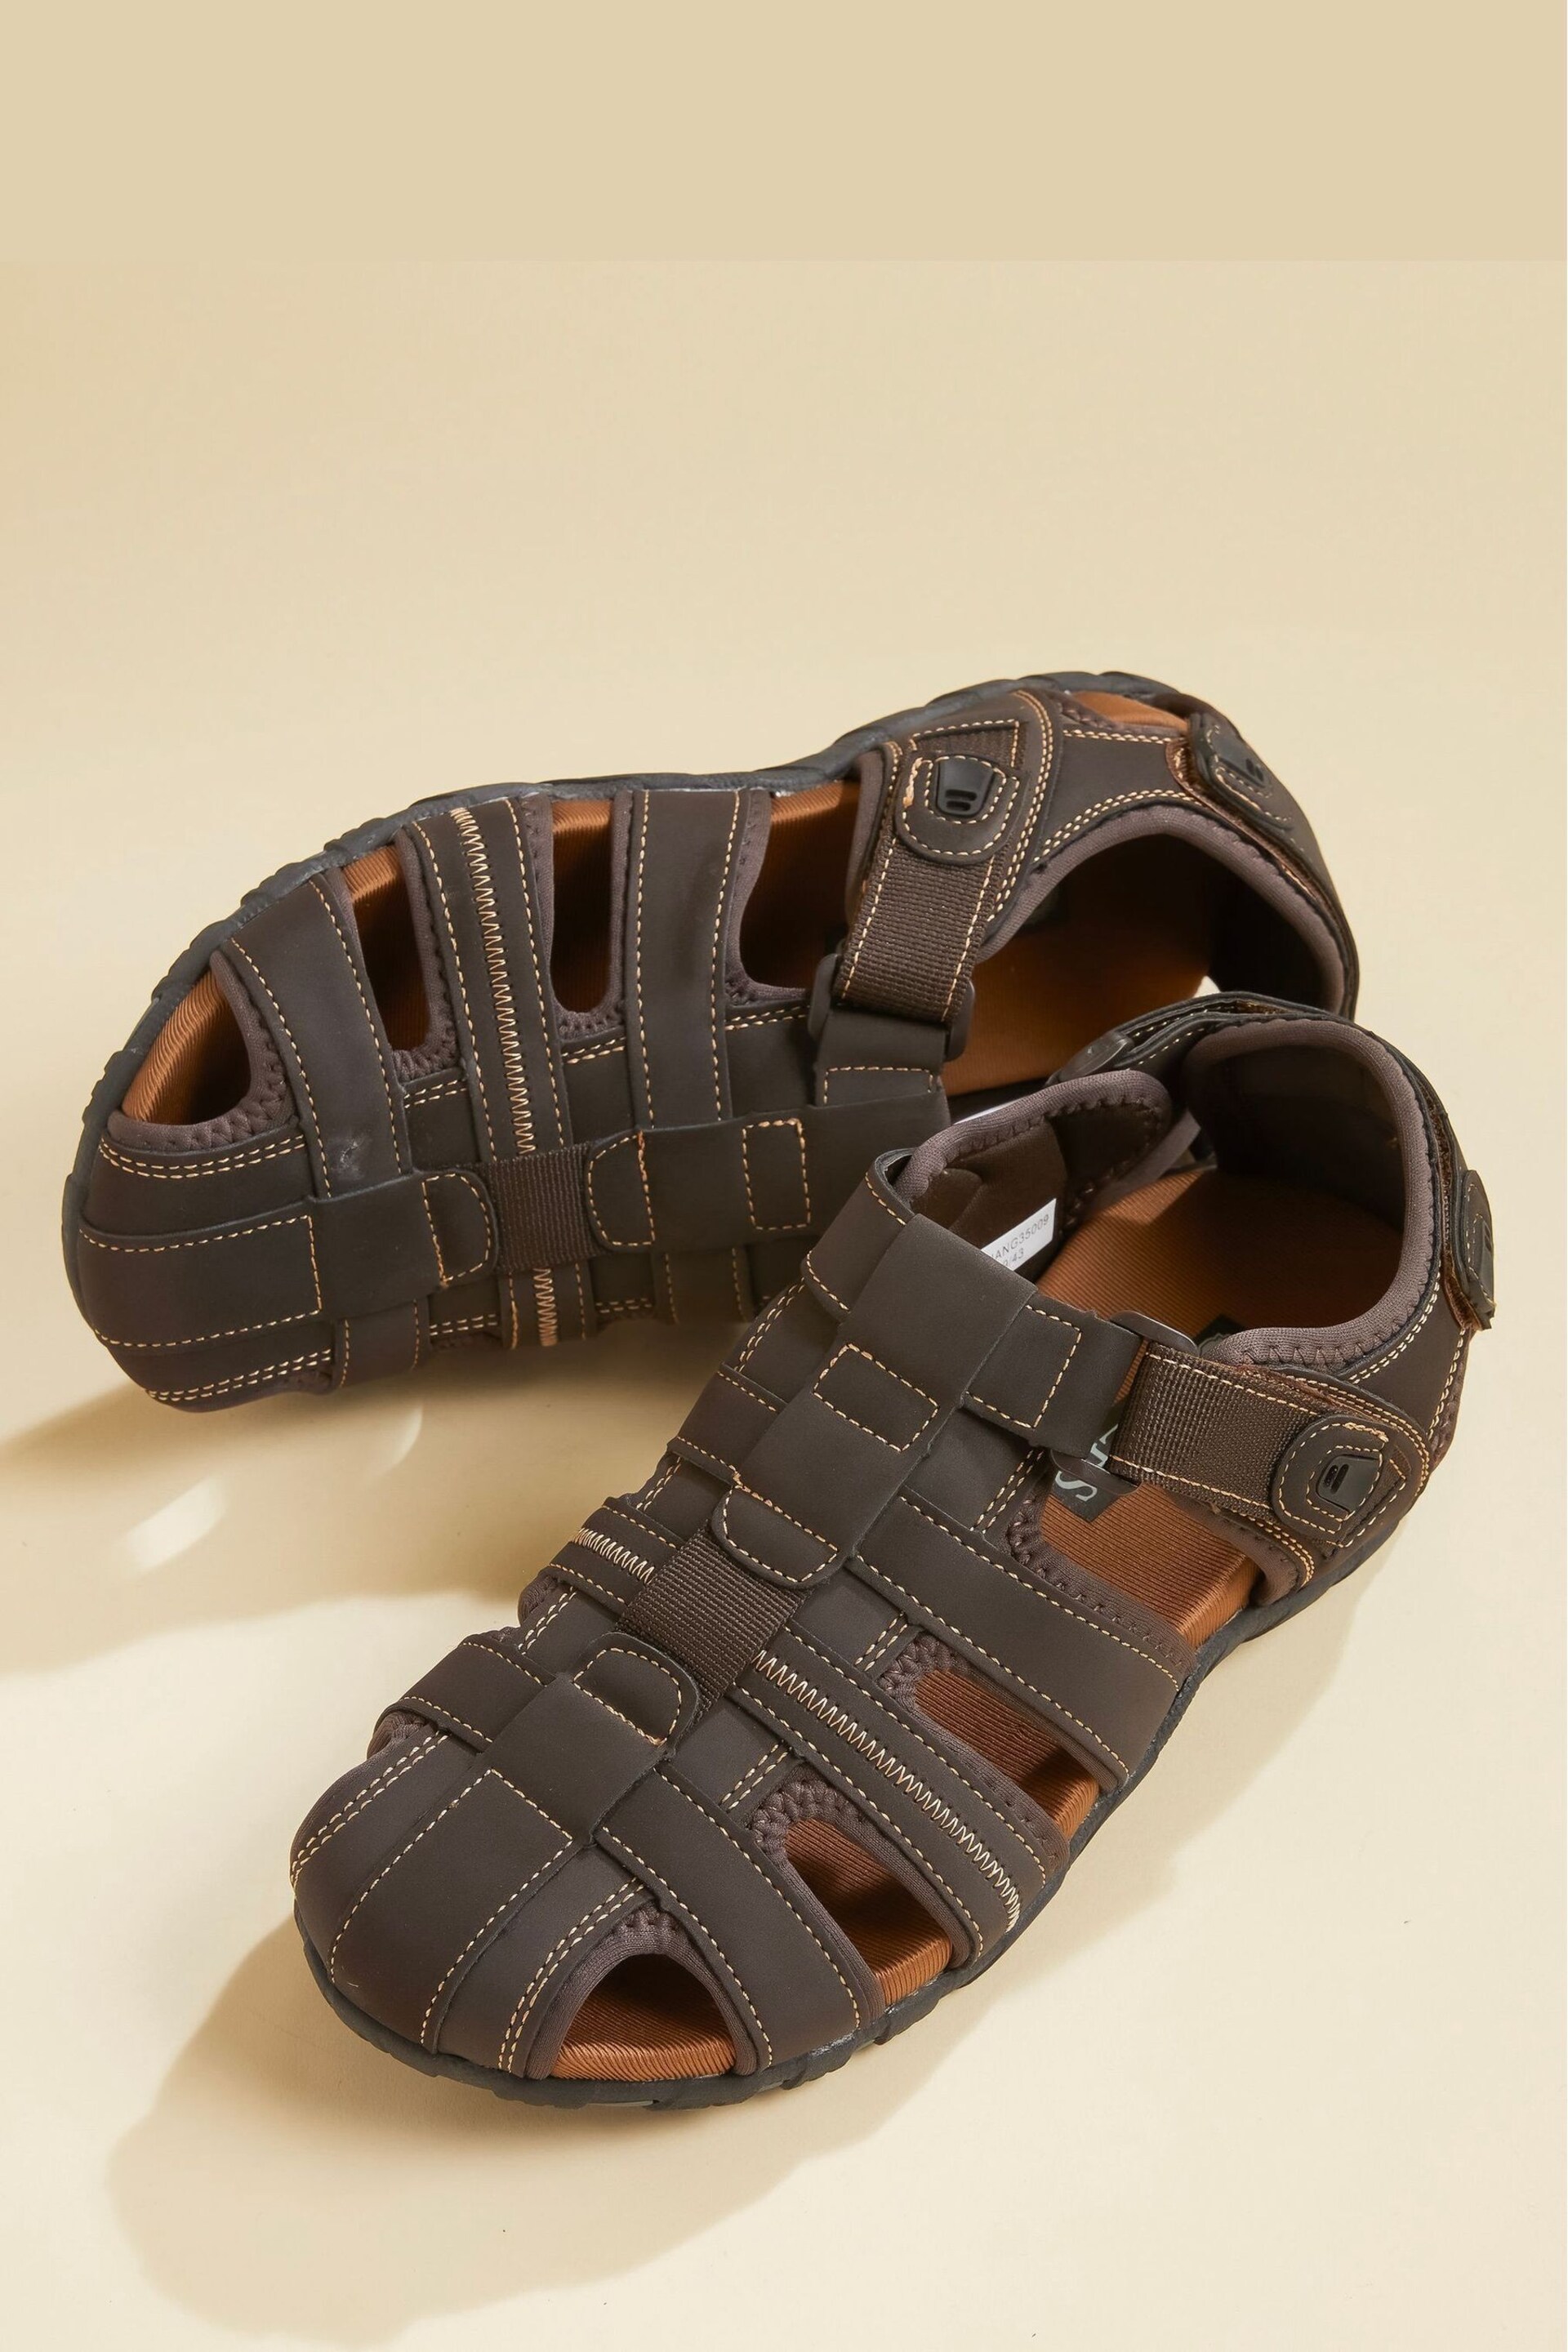 Pavers Adjustable Summer Brown Sandals - Image 1 of 5